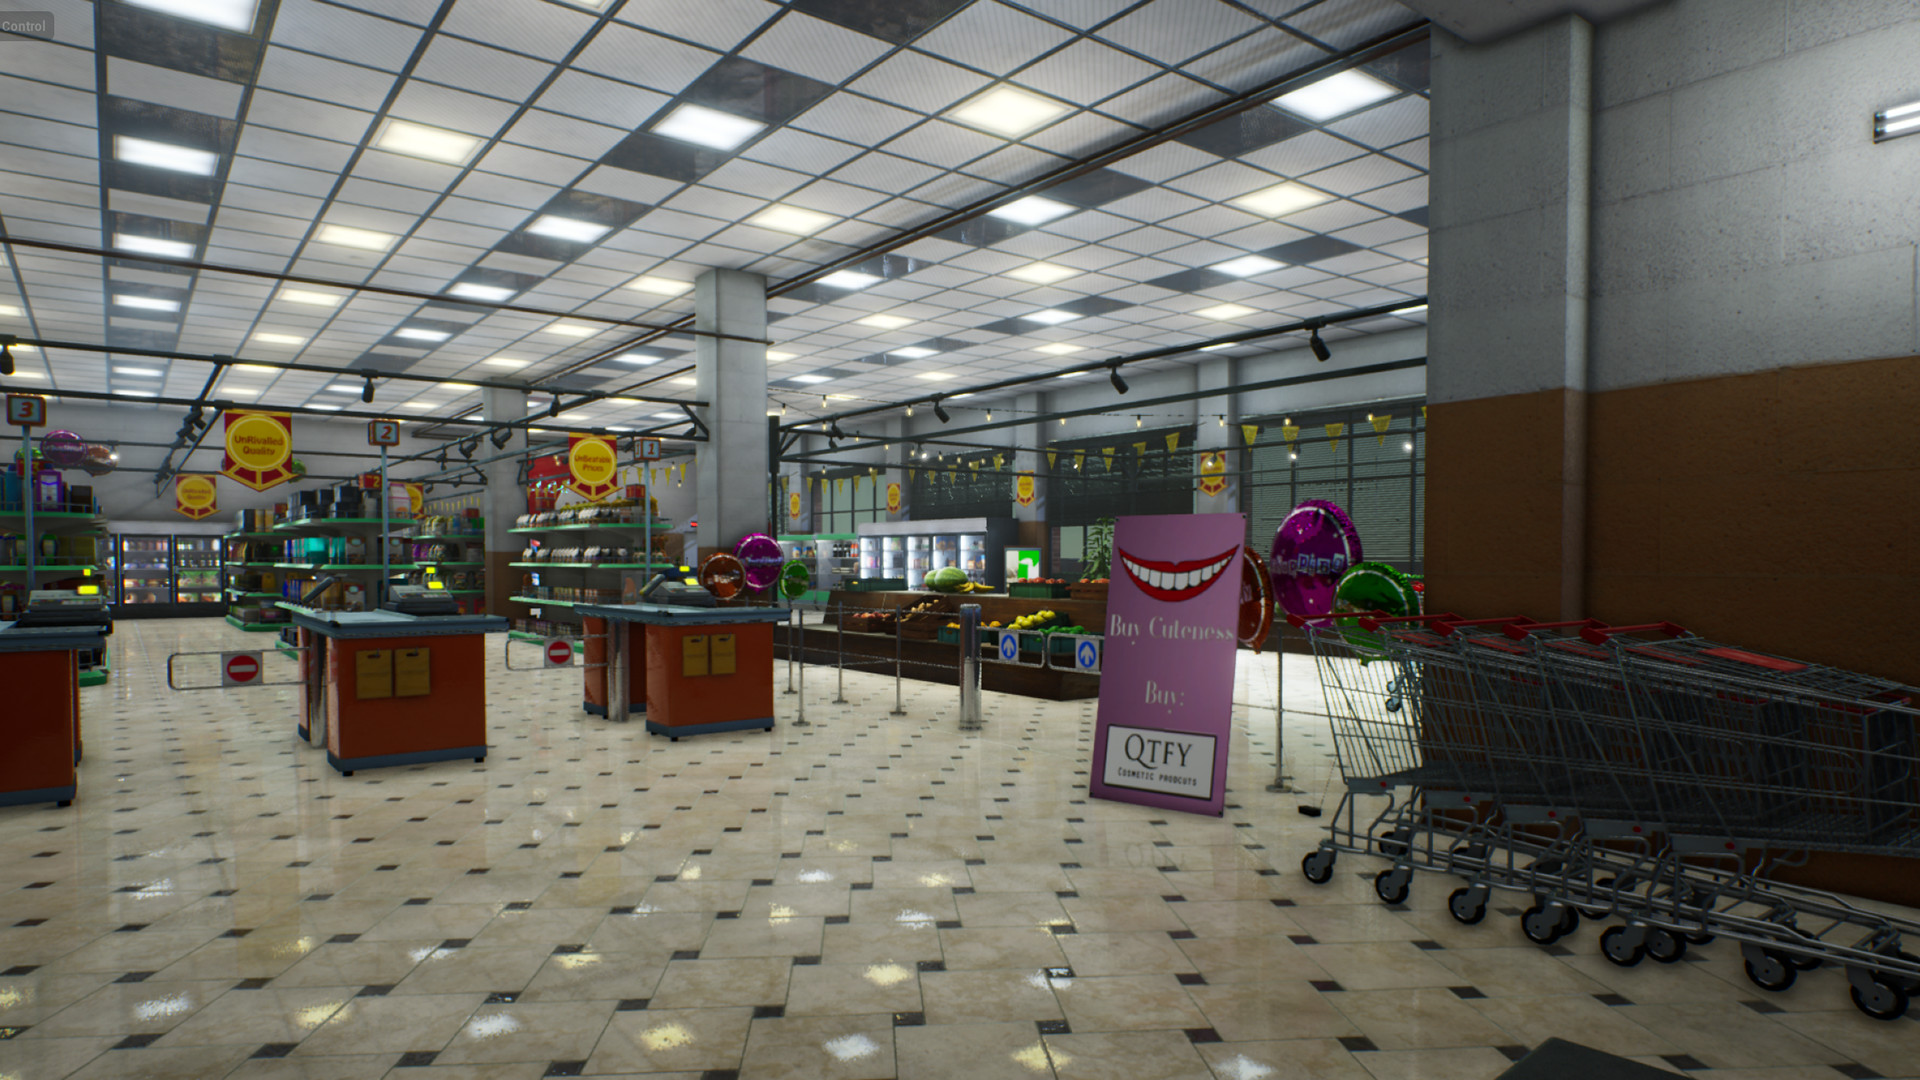 Supermarket Simulator Free Download